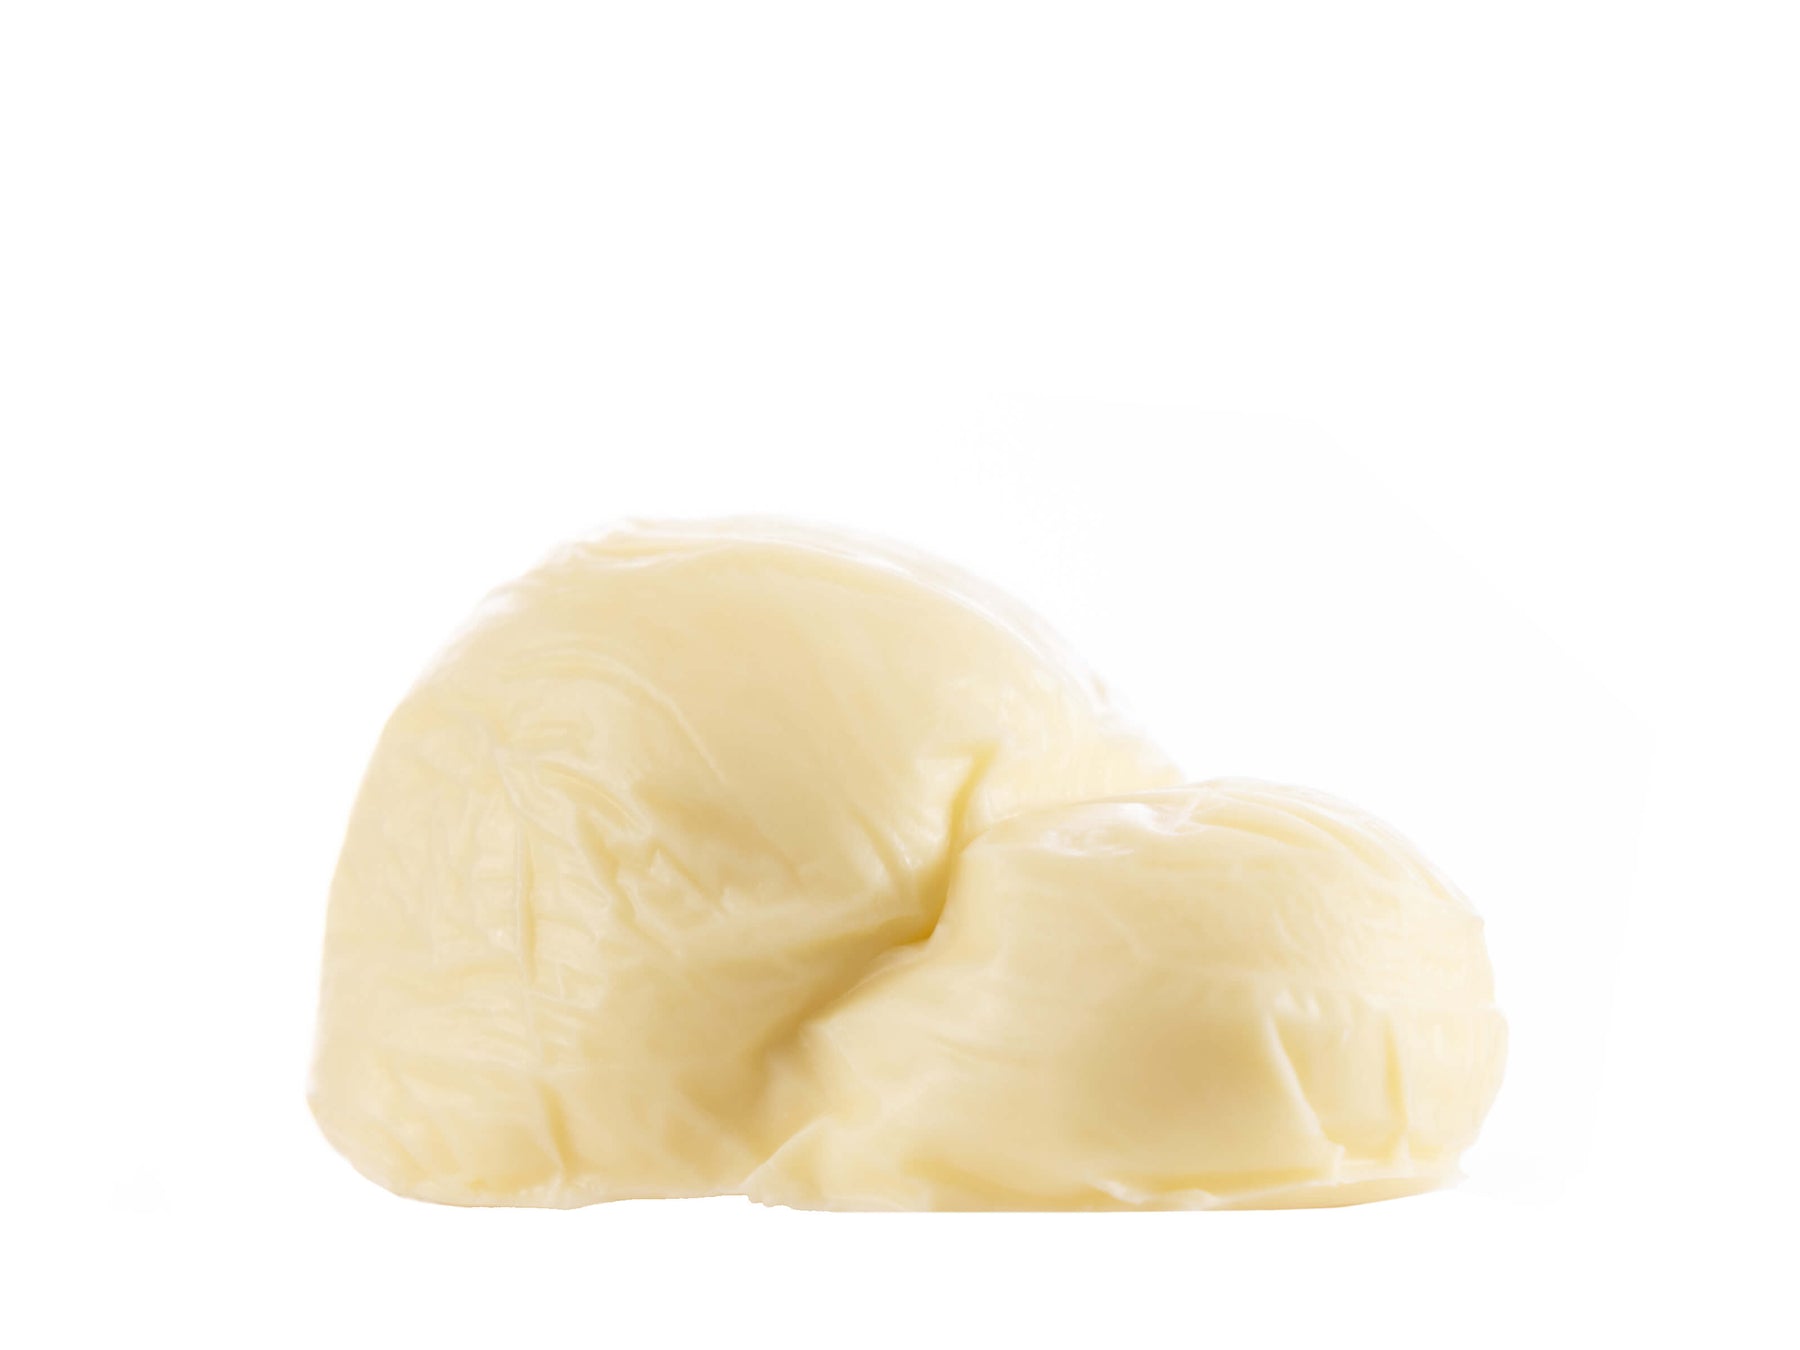 Scamorza Kuhmilch, Käse 300g aus Bianca 43%, birnenförmiger